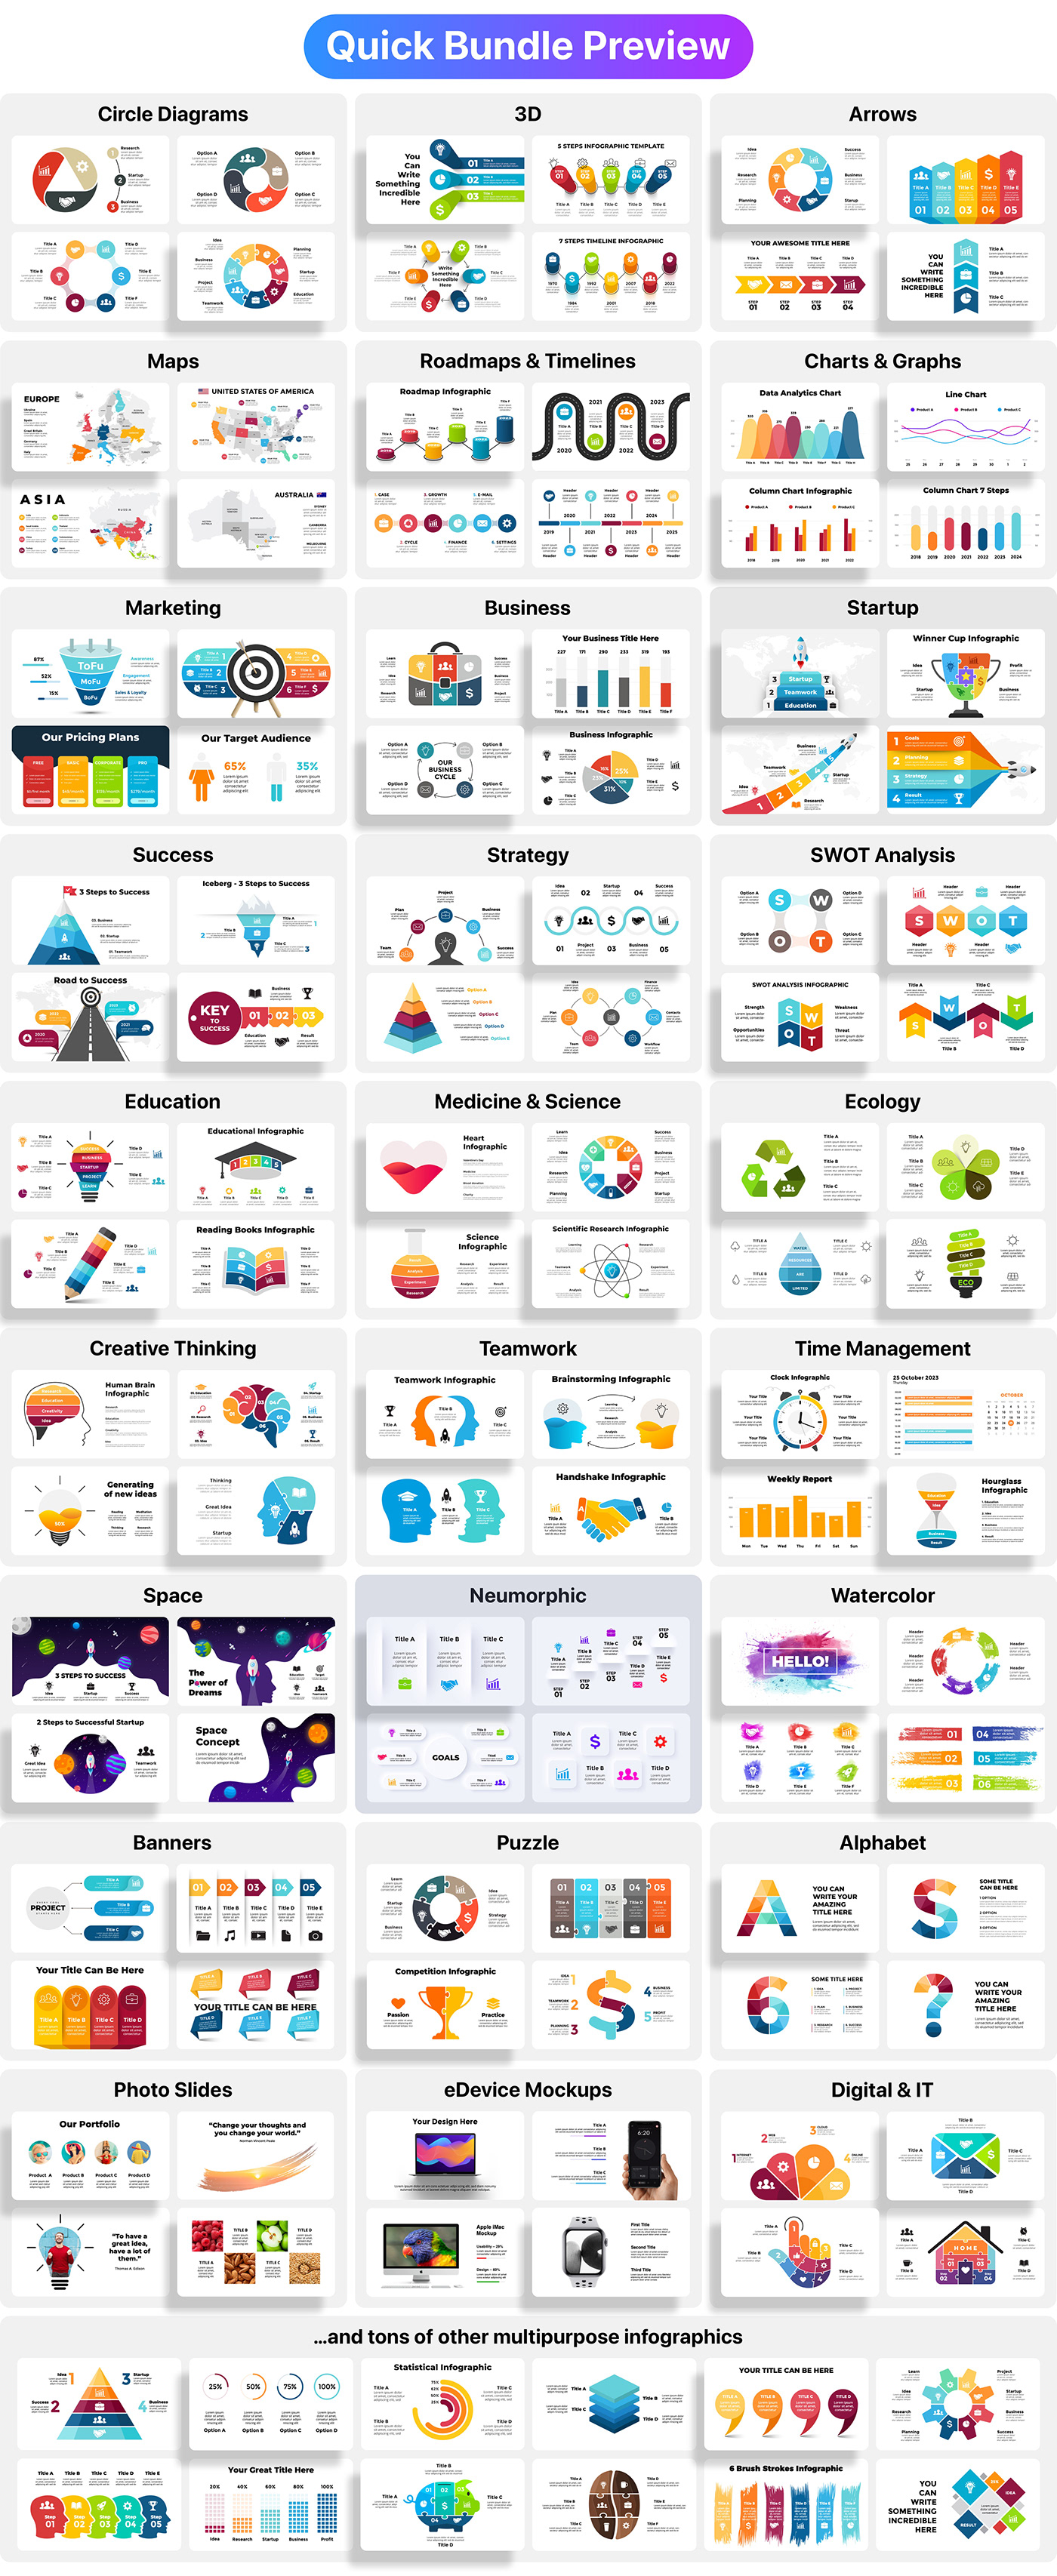 Marketing PowerPoint marketing template marketing slides marketing pitch deck business target digital marketing canva marketing infographic